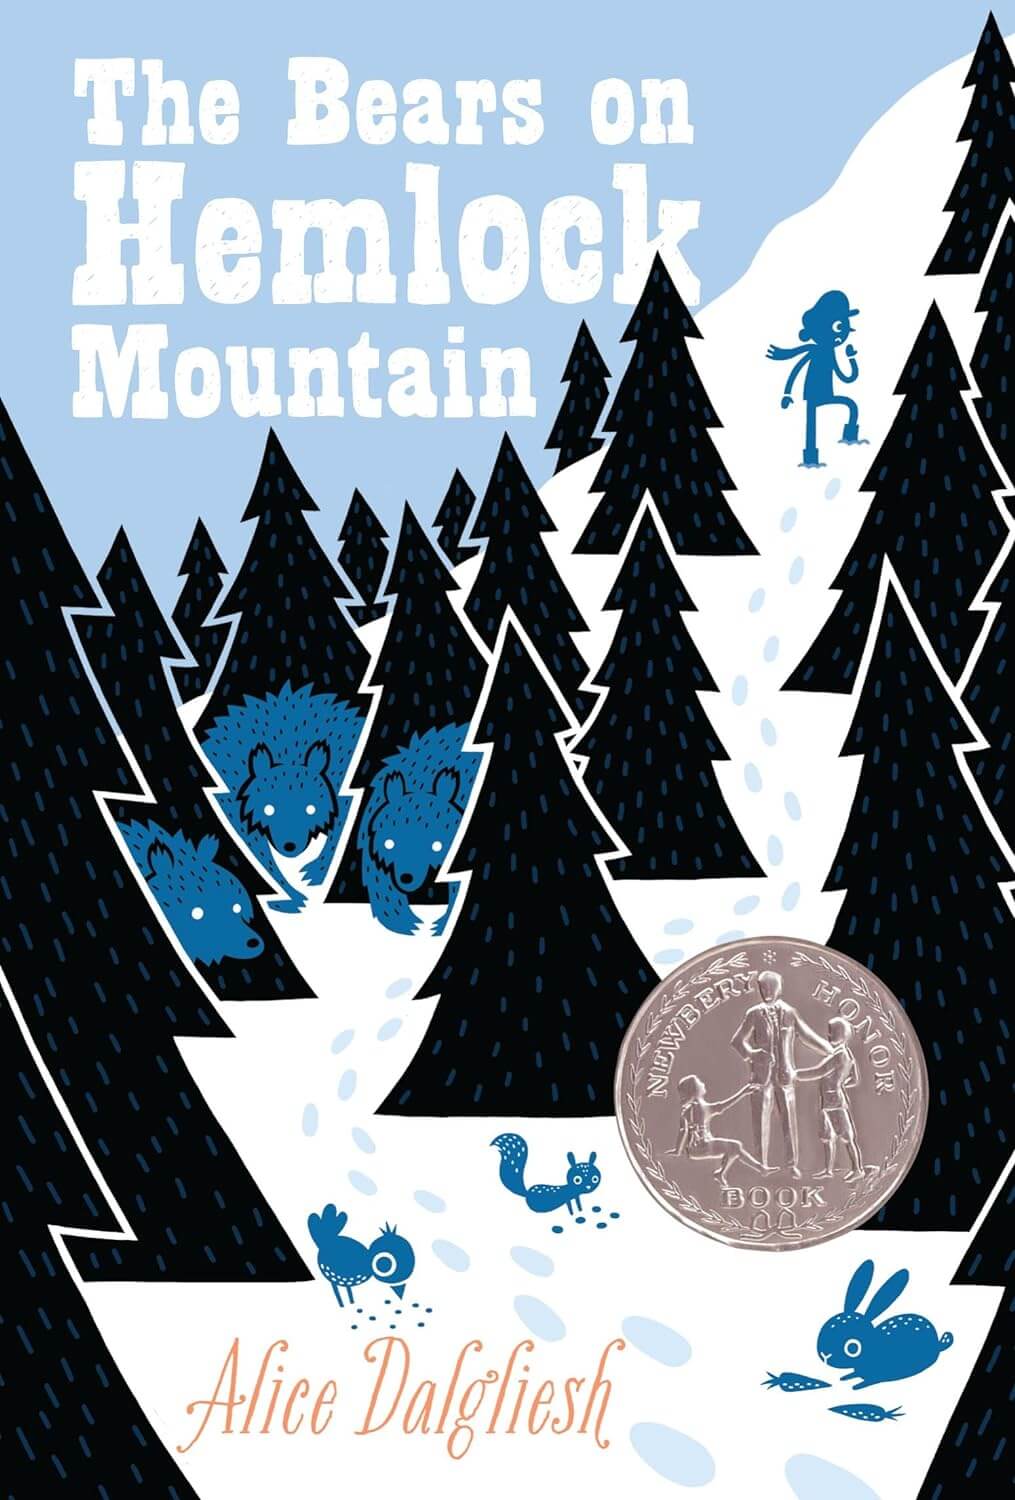 Book: The Bears on Hemlock Mountain 